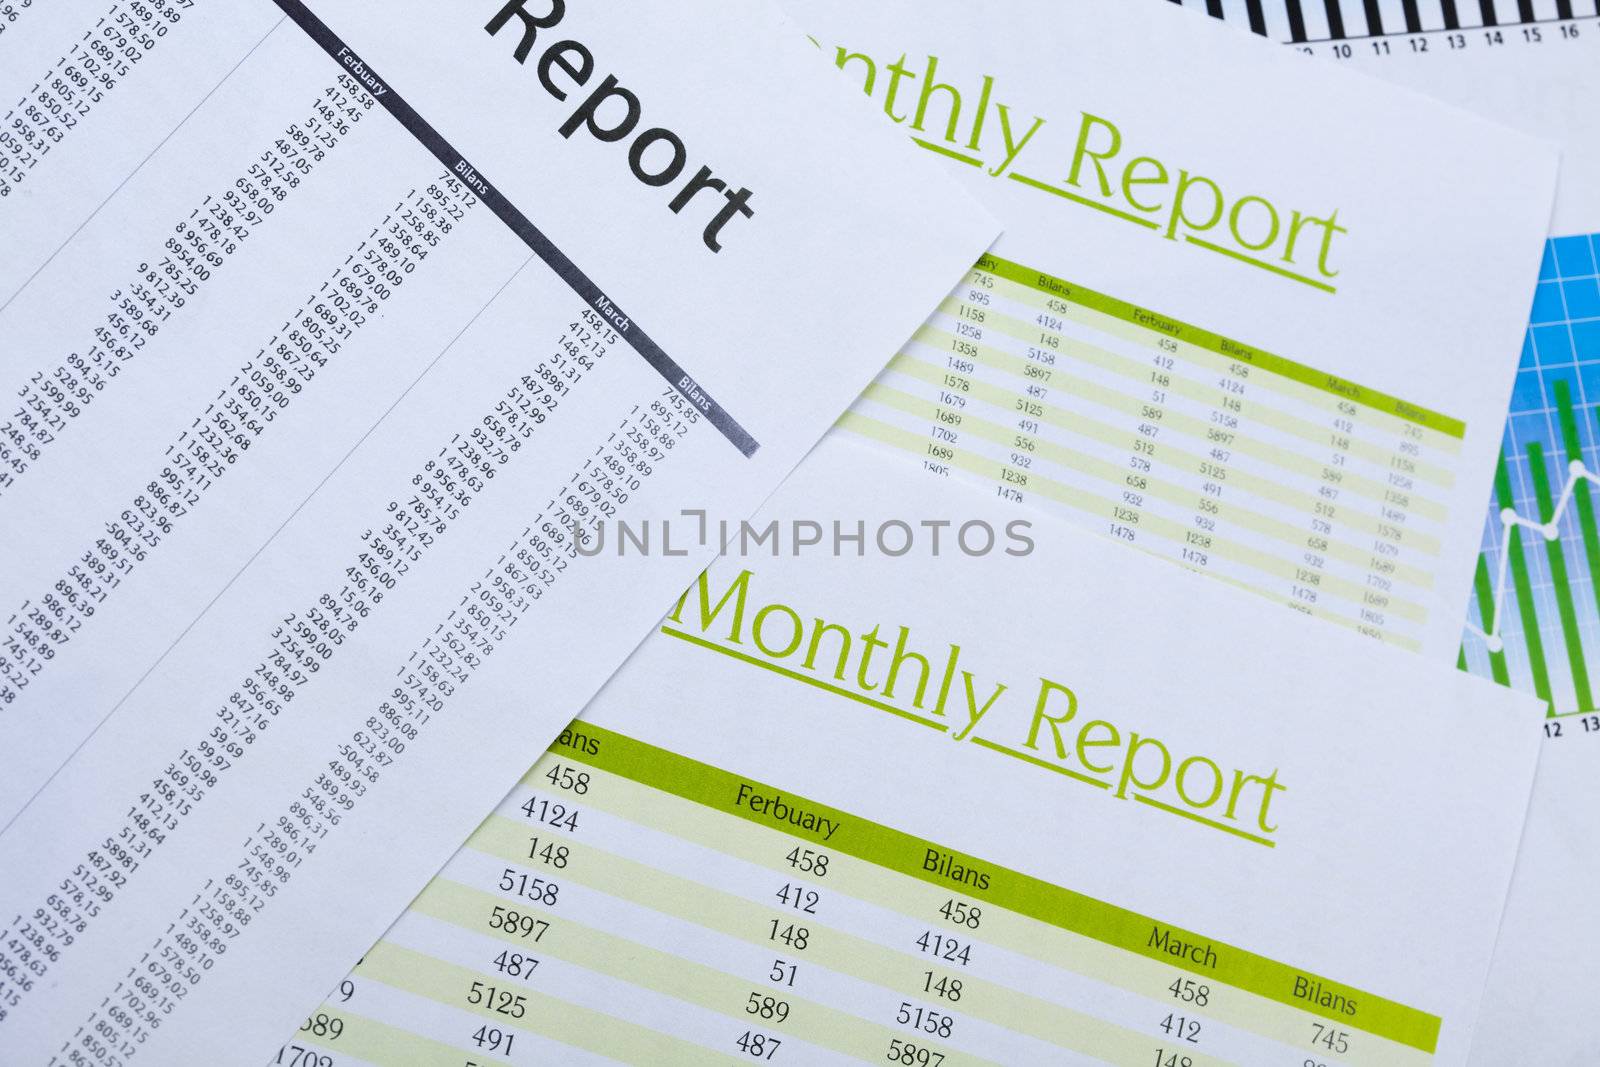 Monthly Report by JanPietruszka